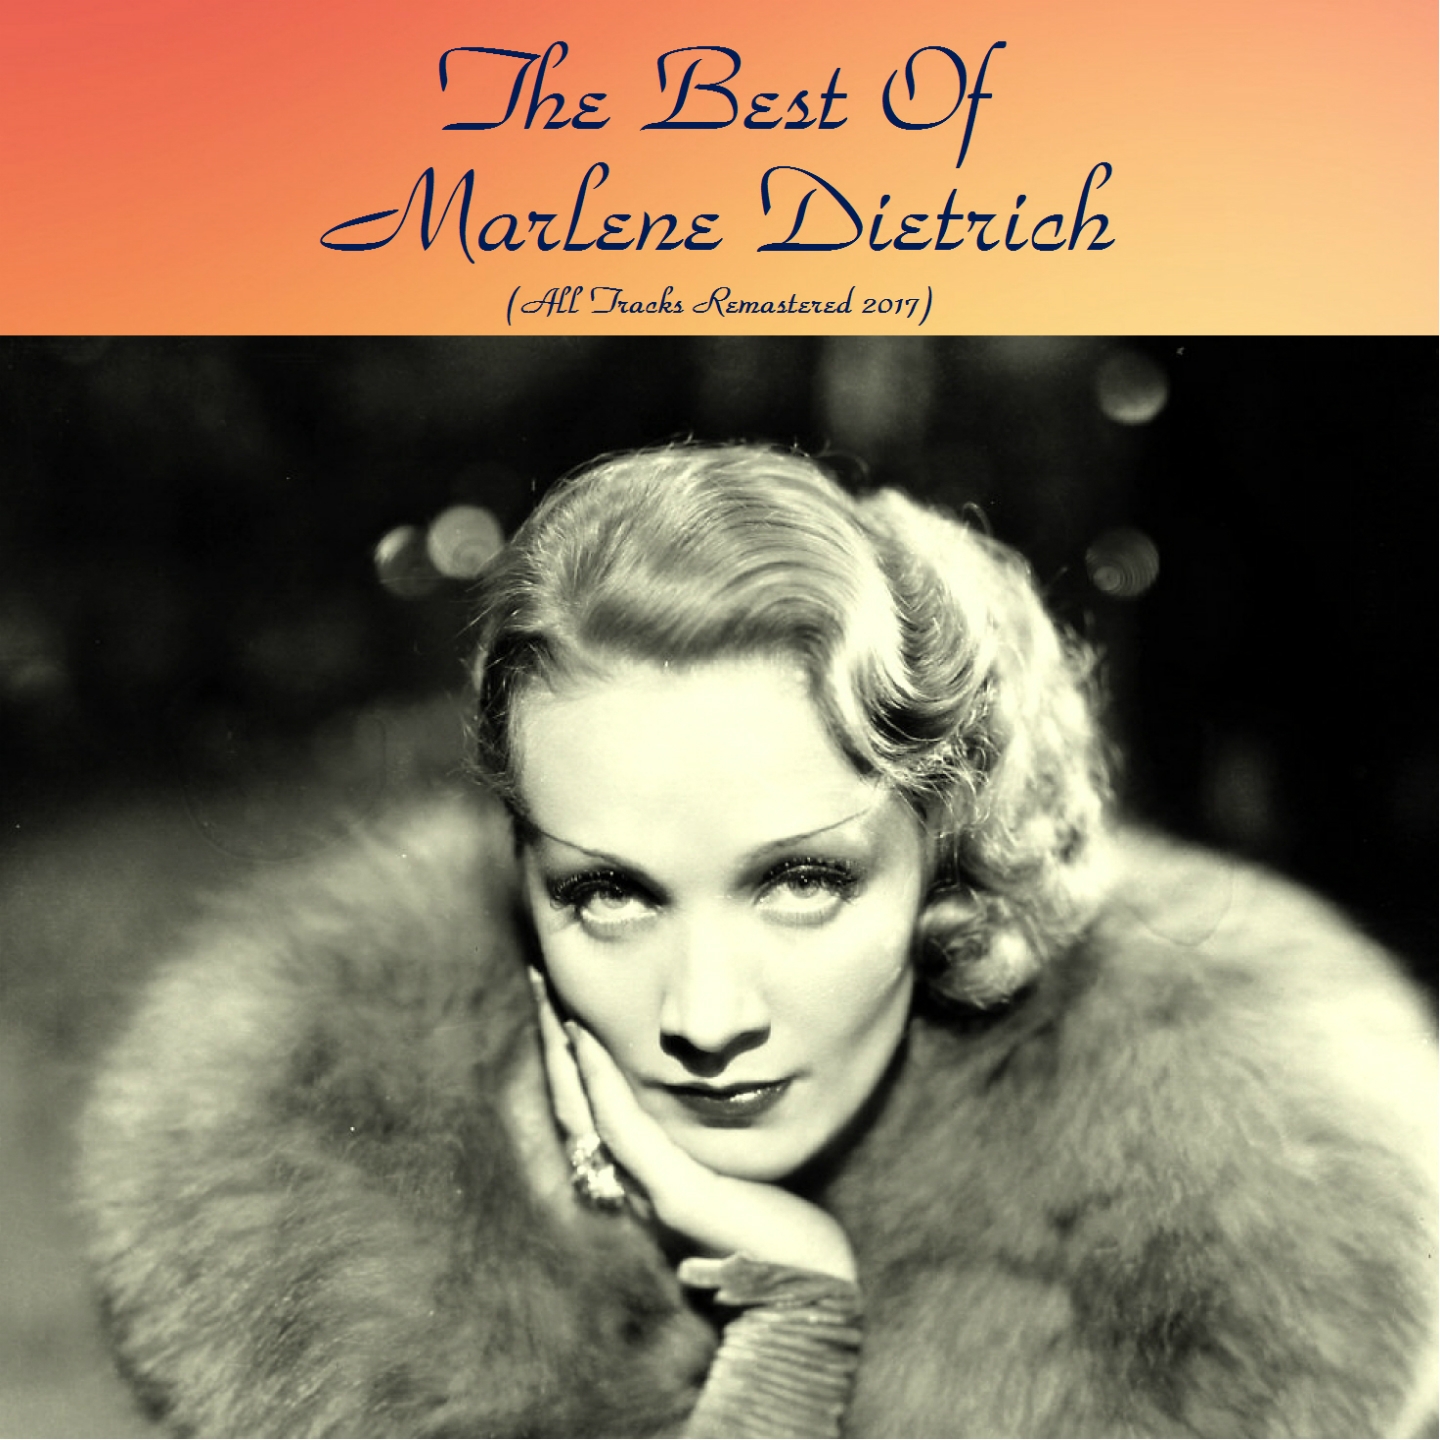 The best of marlene Dietrich